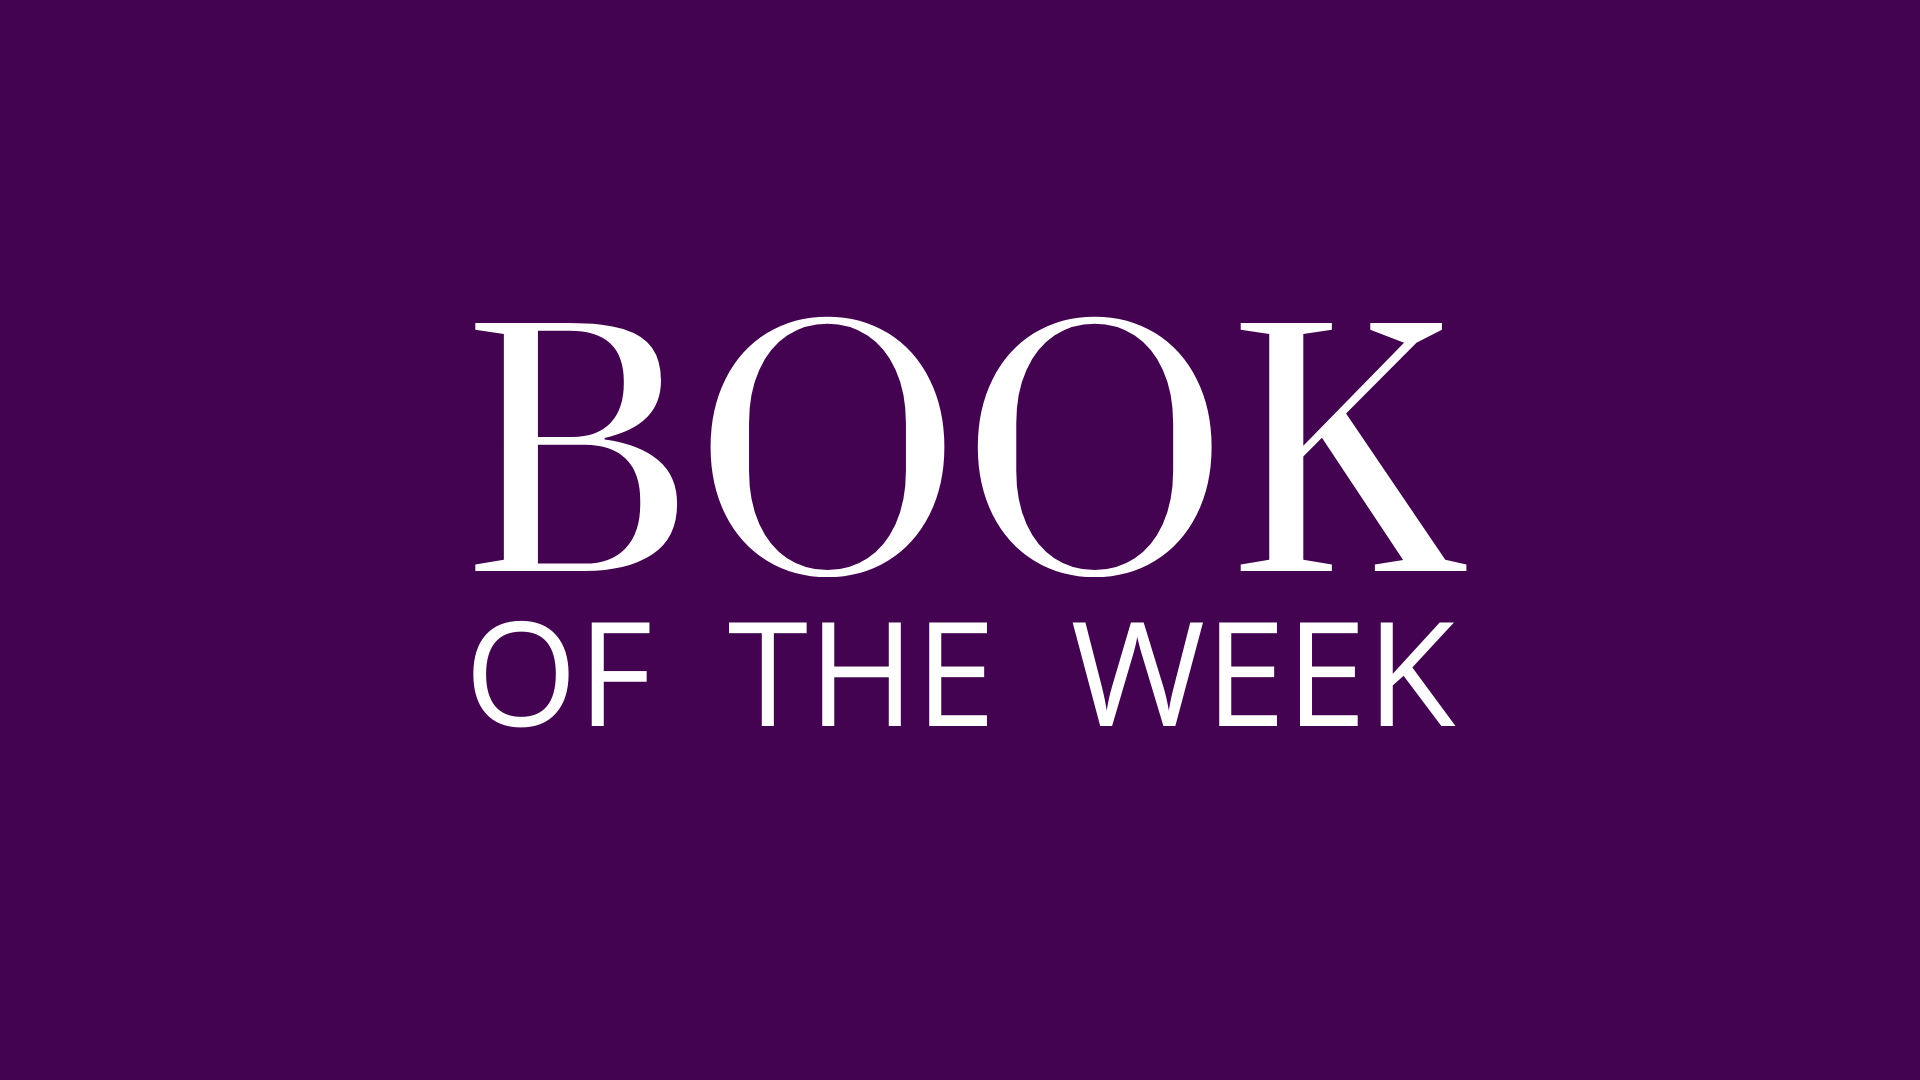 Book of the Week: The Power of Broke